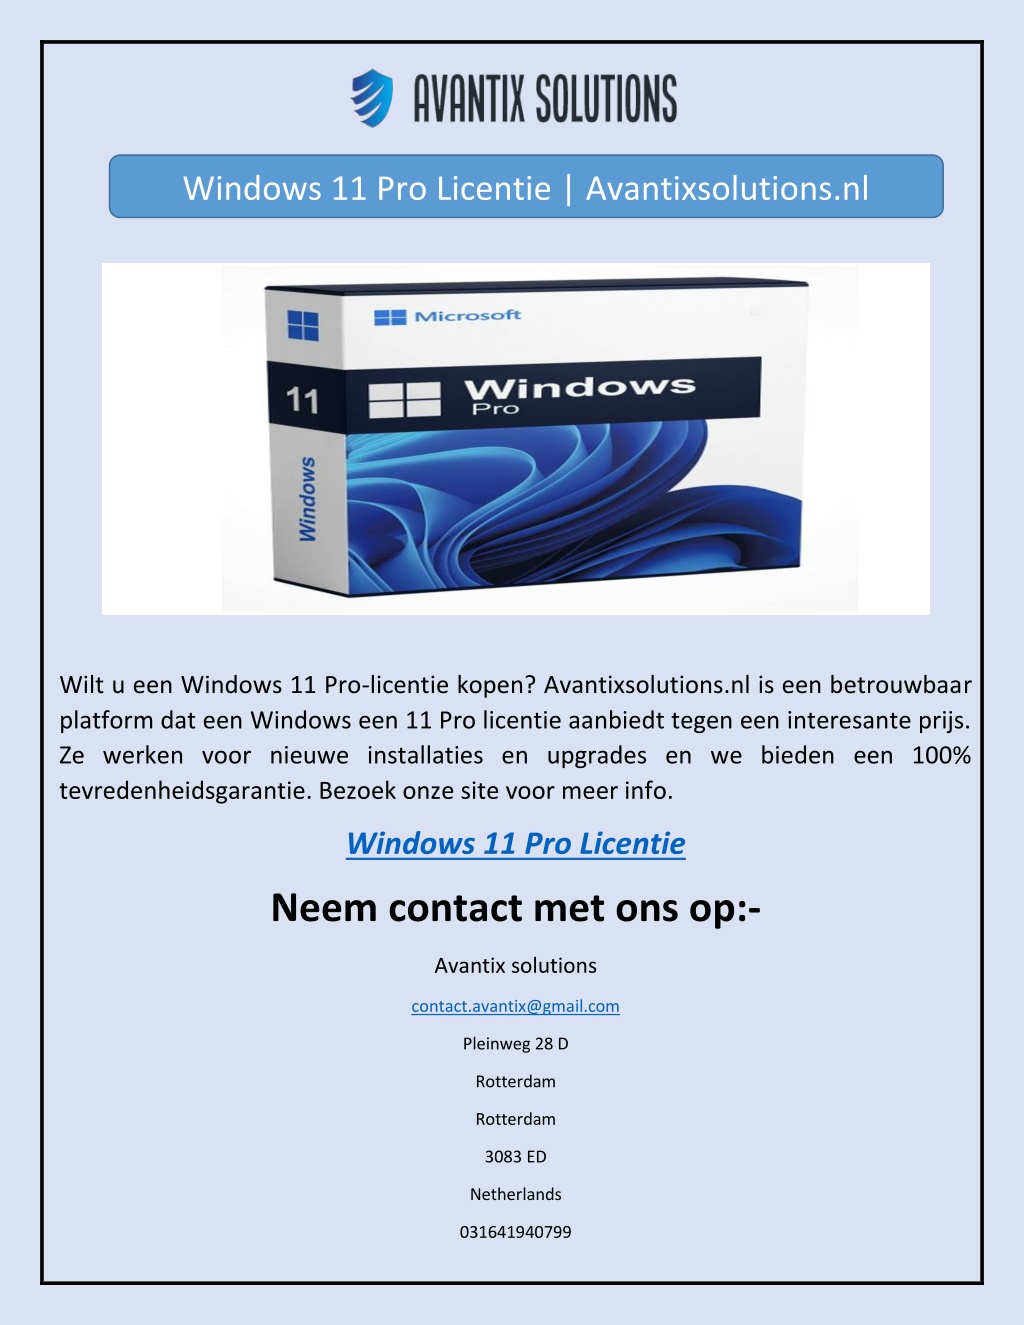 Ppt Windows 11 Pro Licentie Powerpoint Presentation Free Download Id11032874 1121